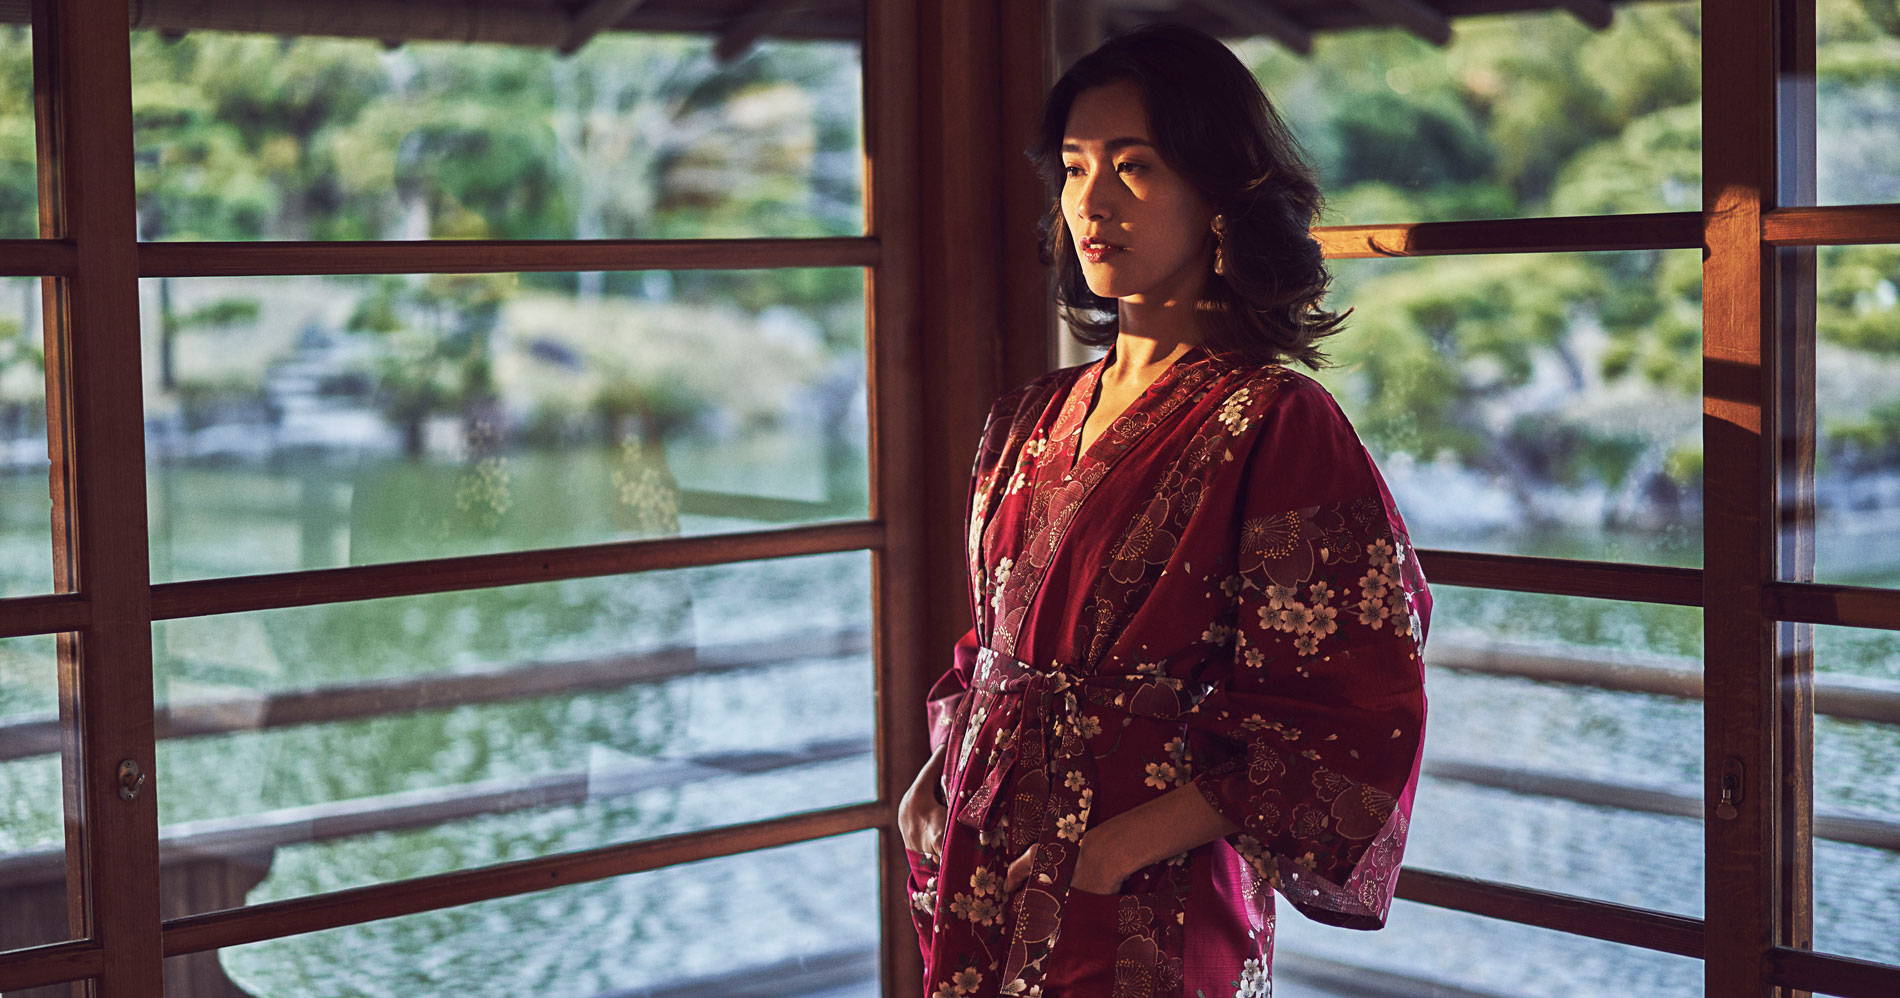 Japanese Men Samurai Yukata Kimono Summer Festival Pajamas Sleepwear Costume